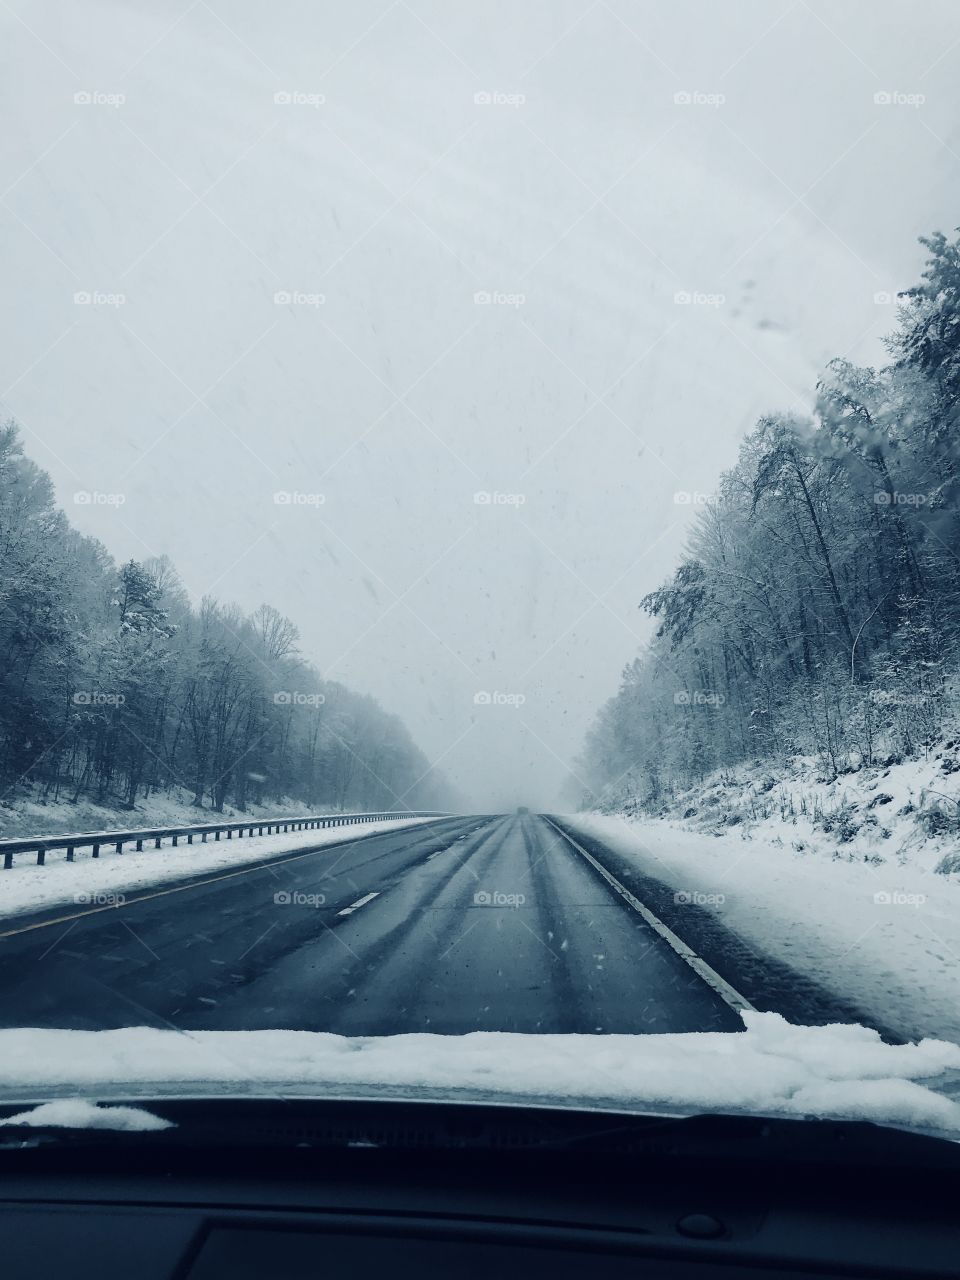 Snowy drive home